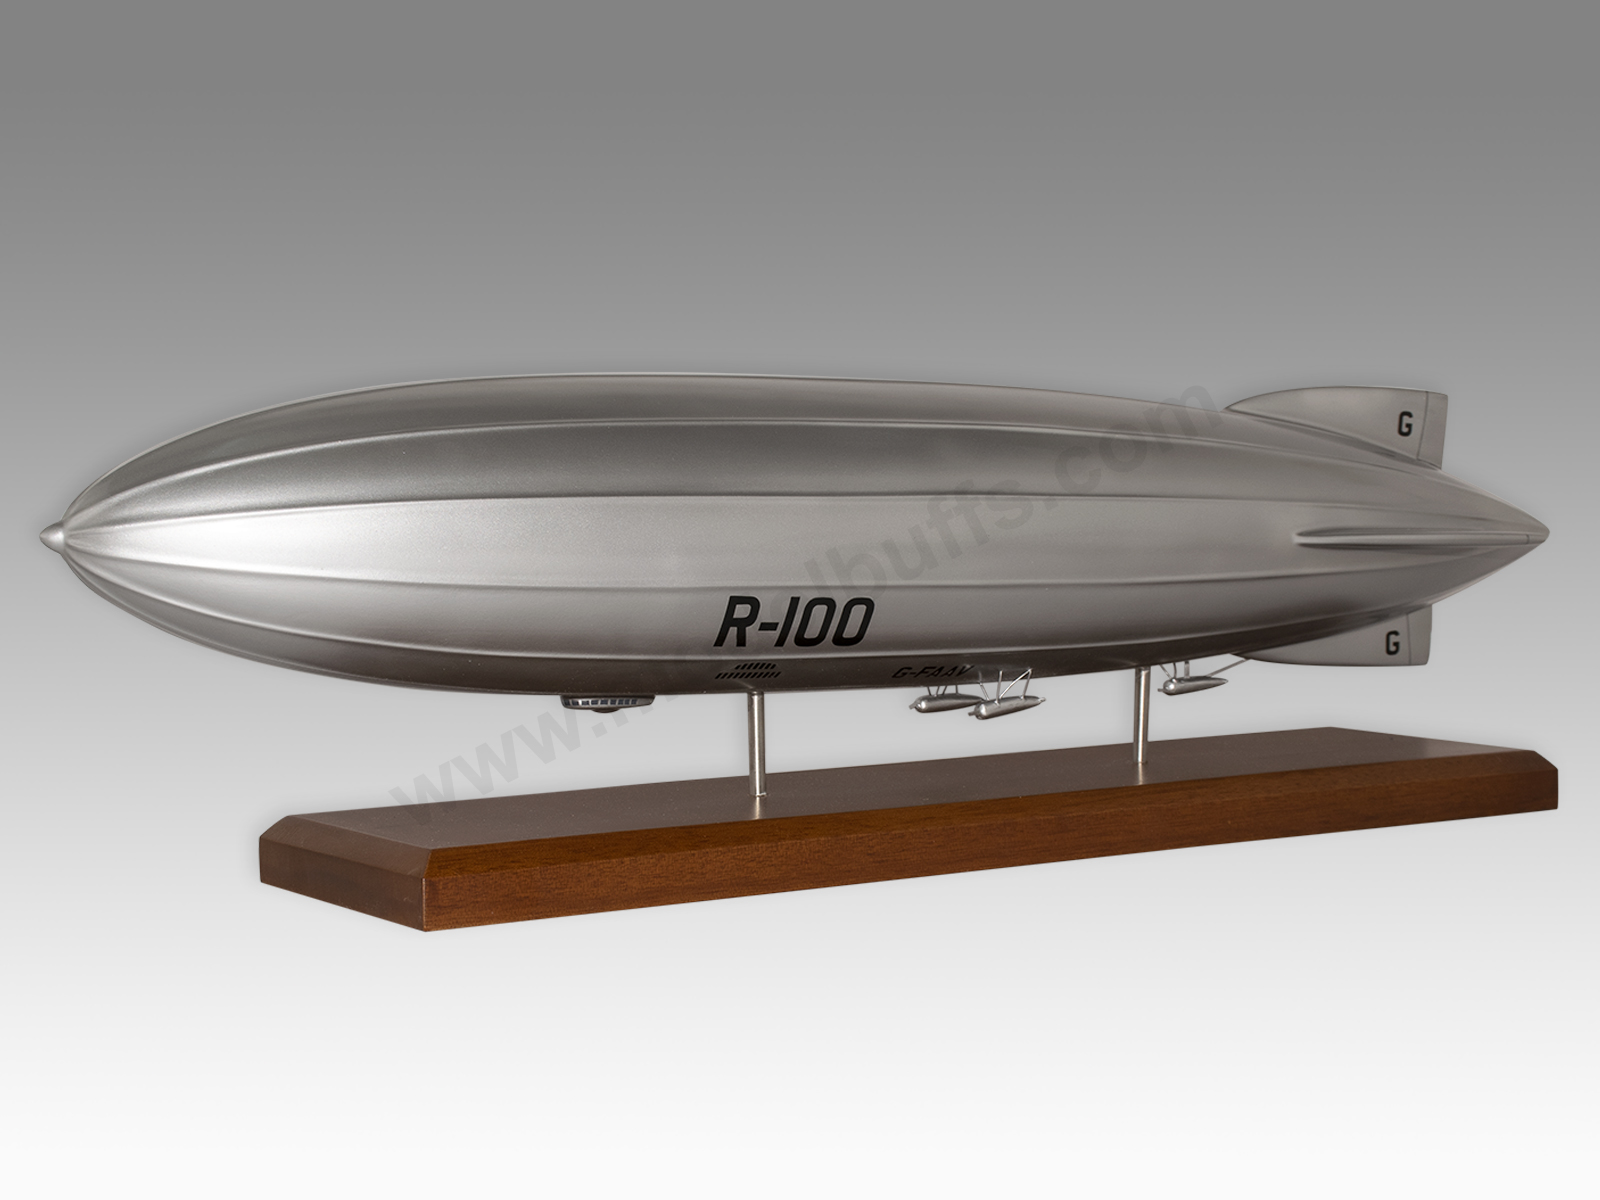 R-100 R.100 R 100 Airship Model